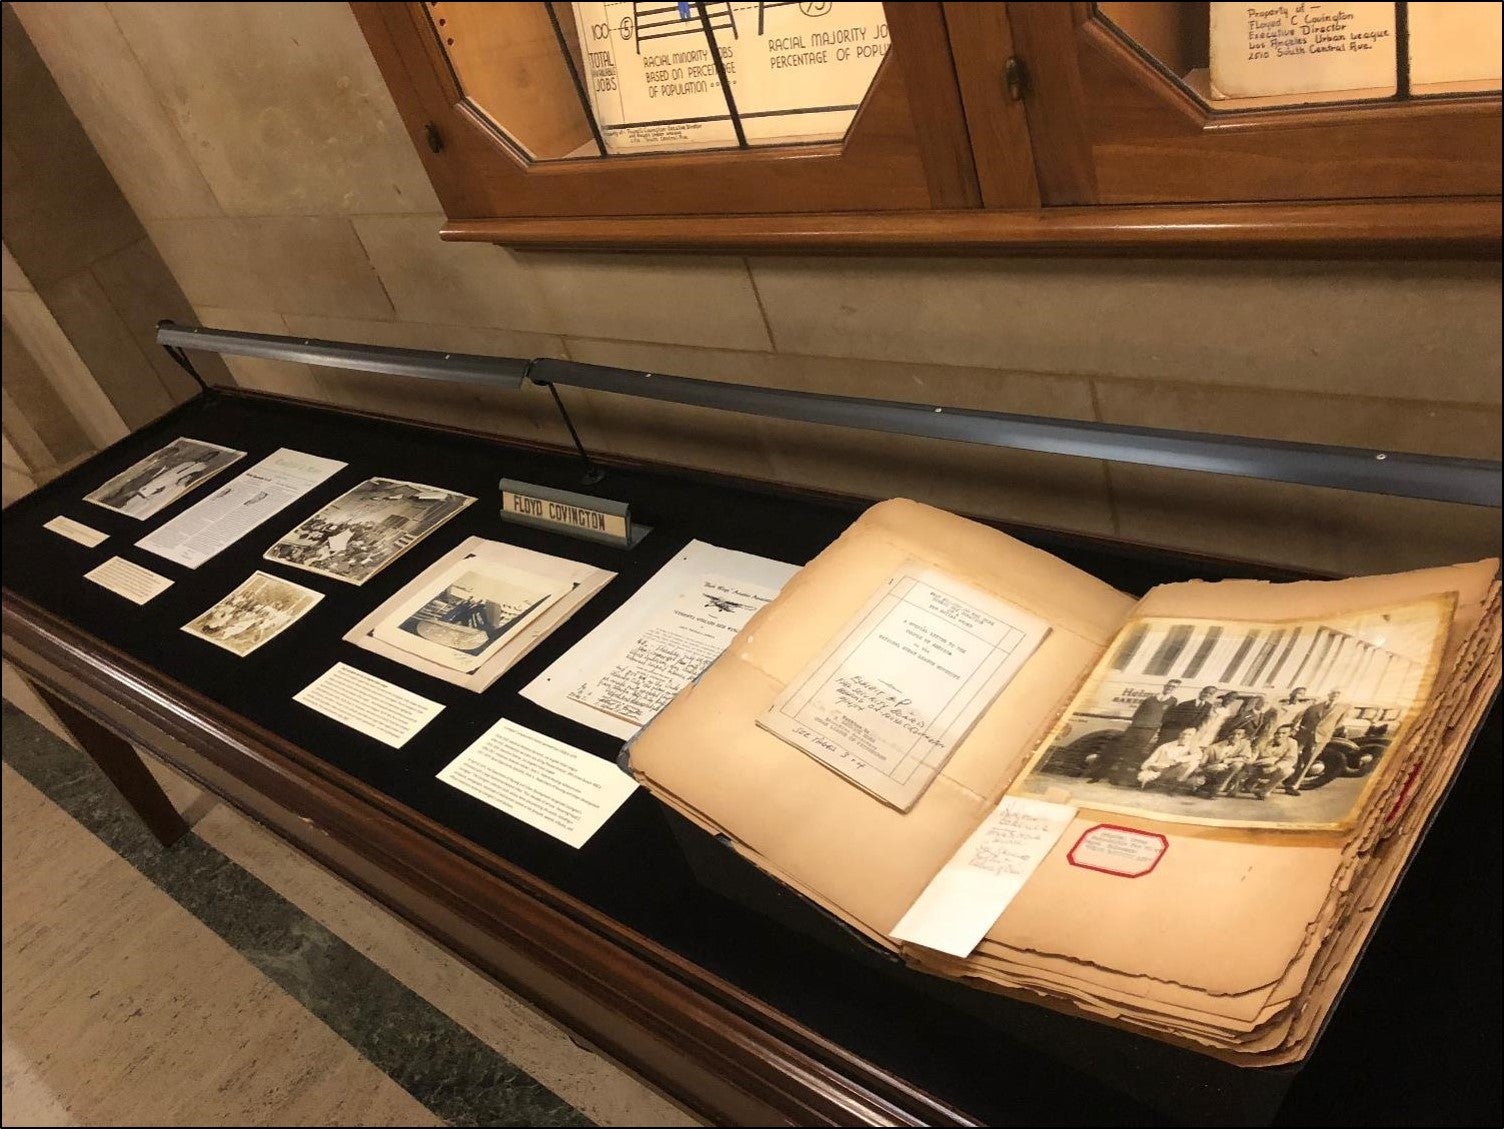 Floyd C. Covington papers - lobby left display case